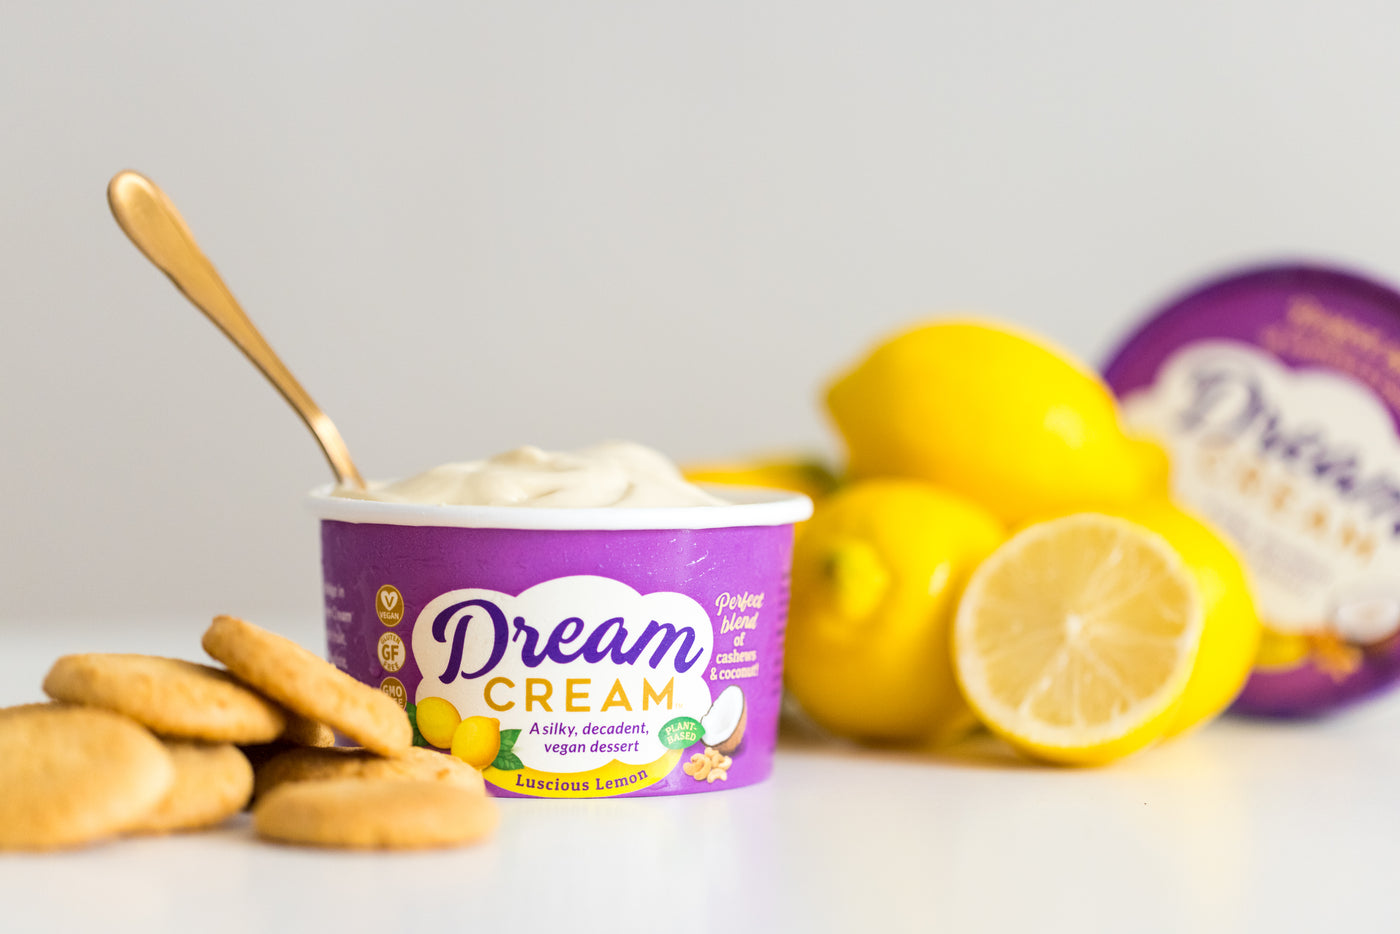 Dream Cream Luscious Lemon with lemons and cookies